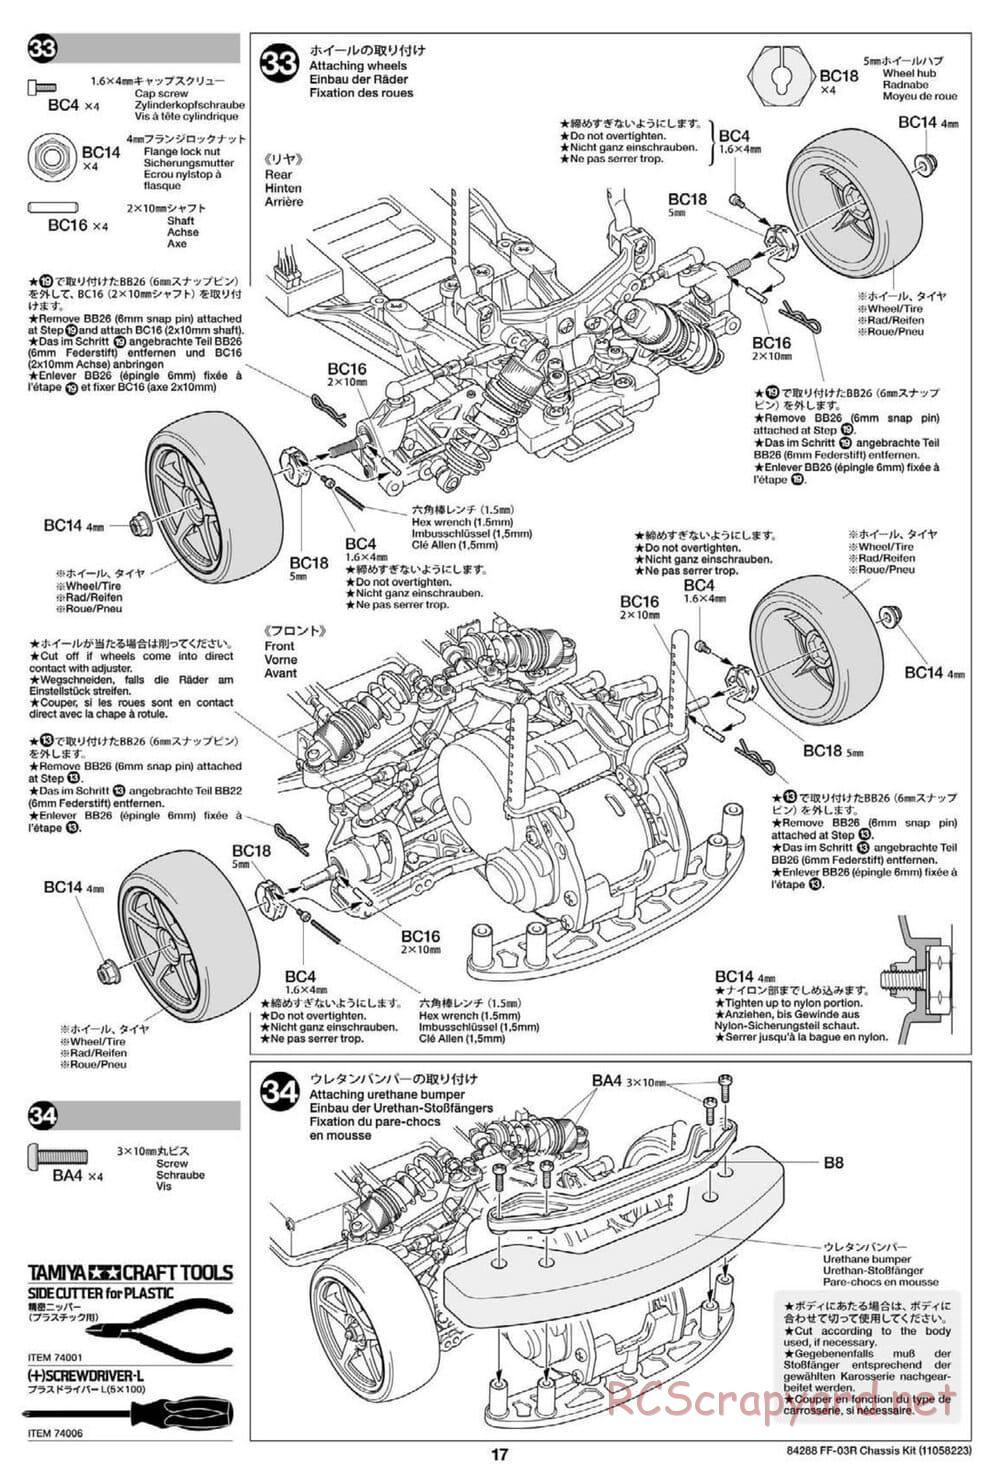 Tamiya - FF-03R Chassis - Manual - Page 19